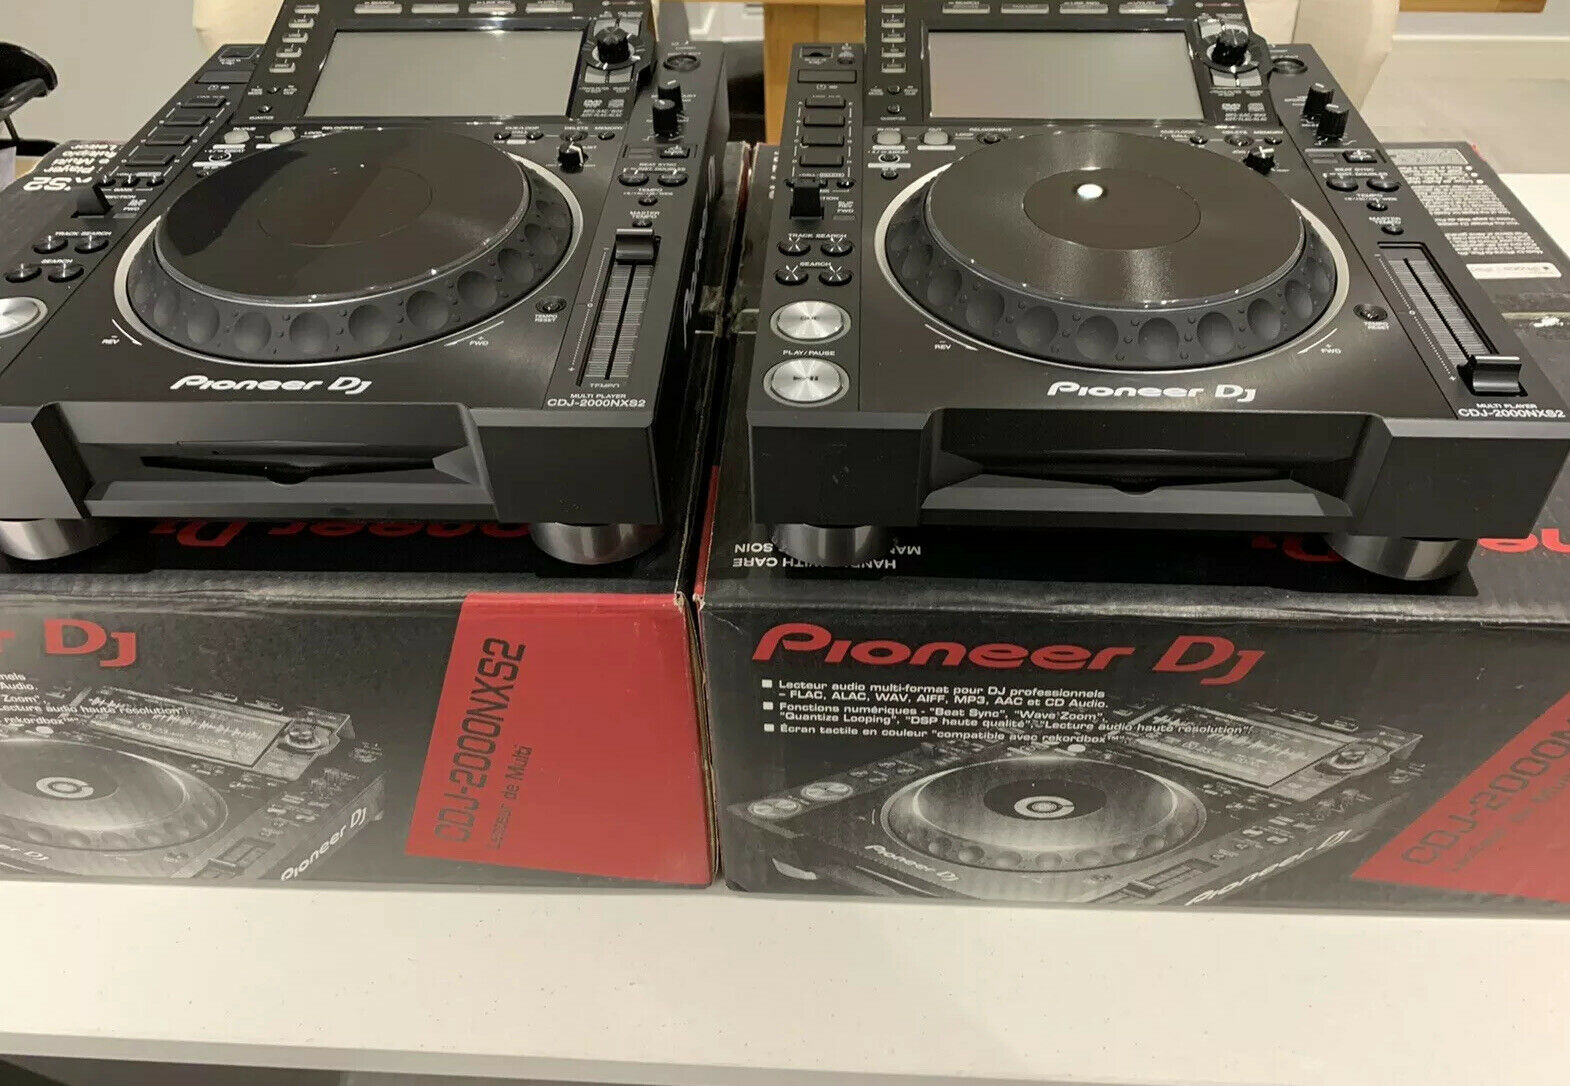 For sale 2x Pioneer CDJ-2000nxs plus 1 DJM-900nxs